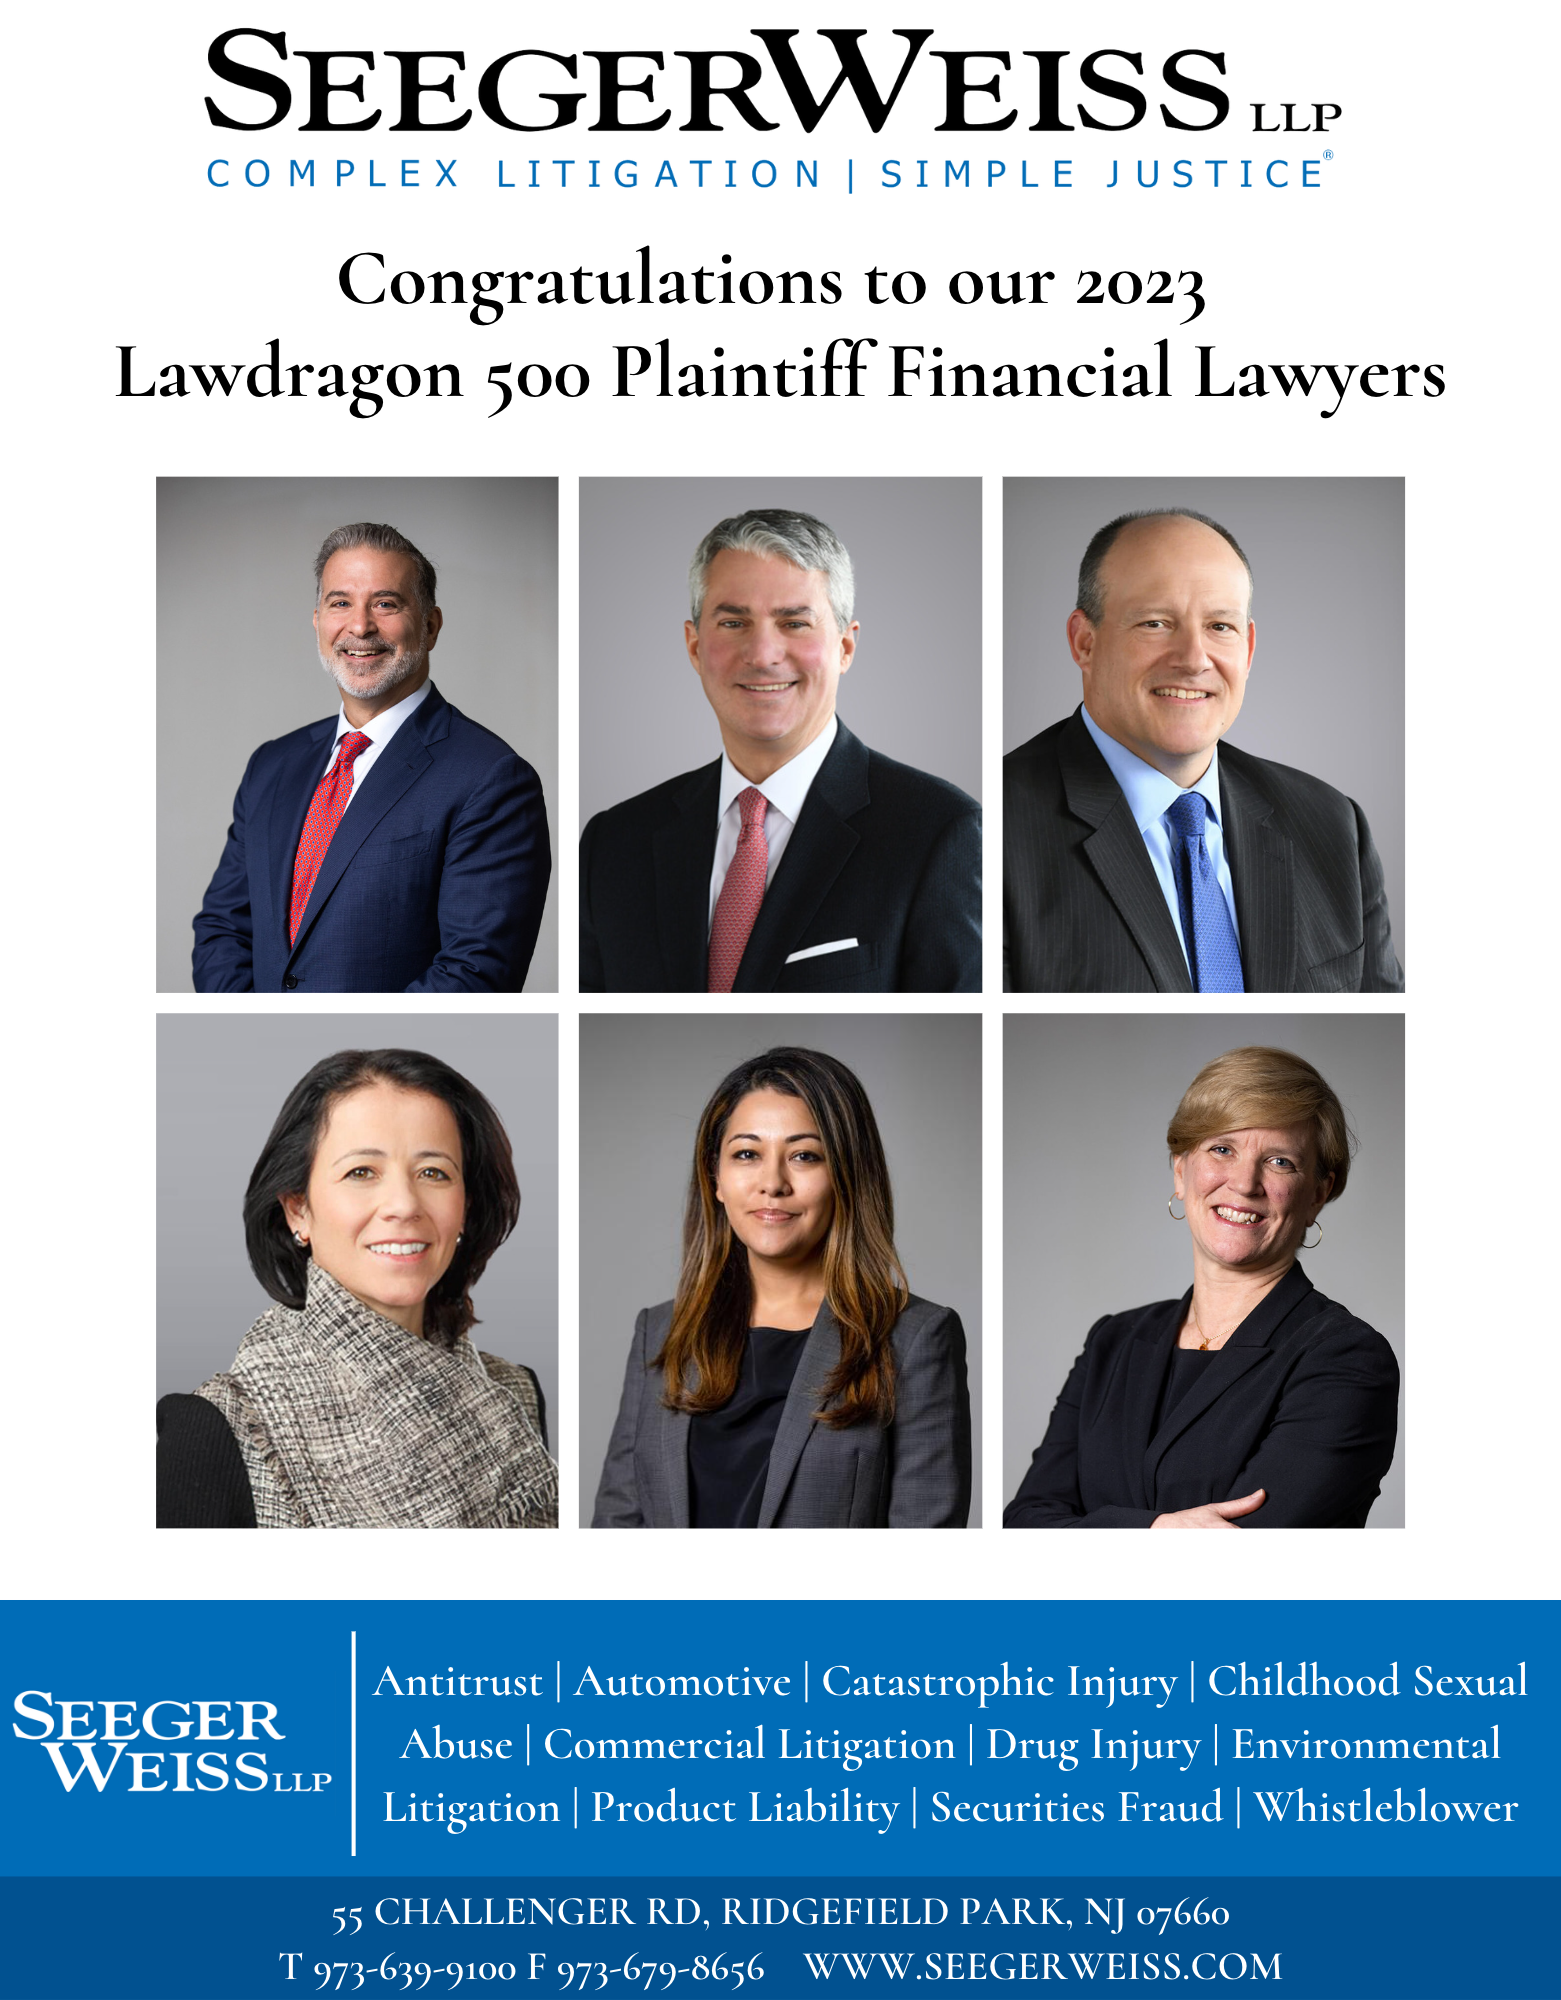 Lawdragon Names Six Seeger Weiss Partners to 500 Leading Plaintiff Financial Lawyers List